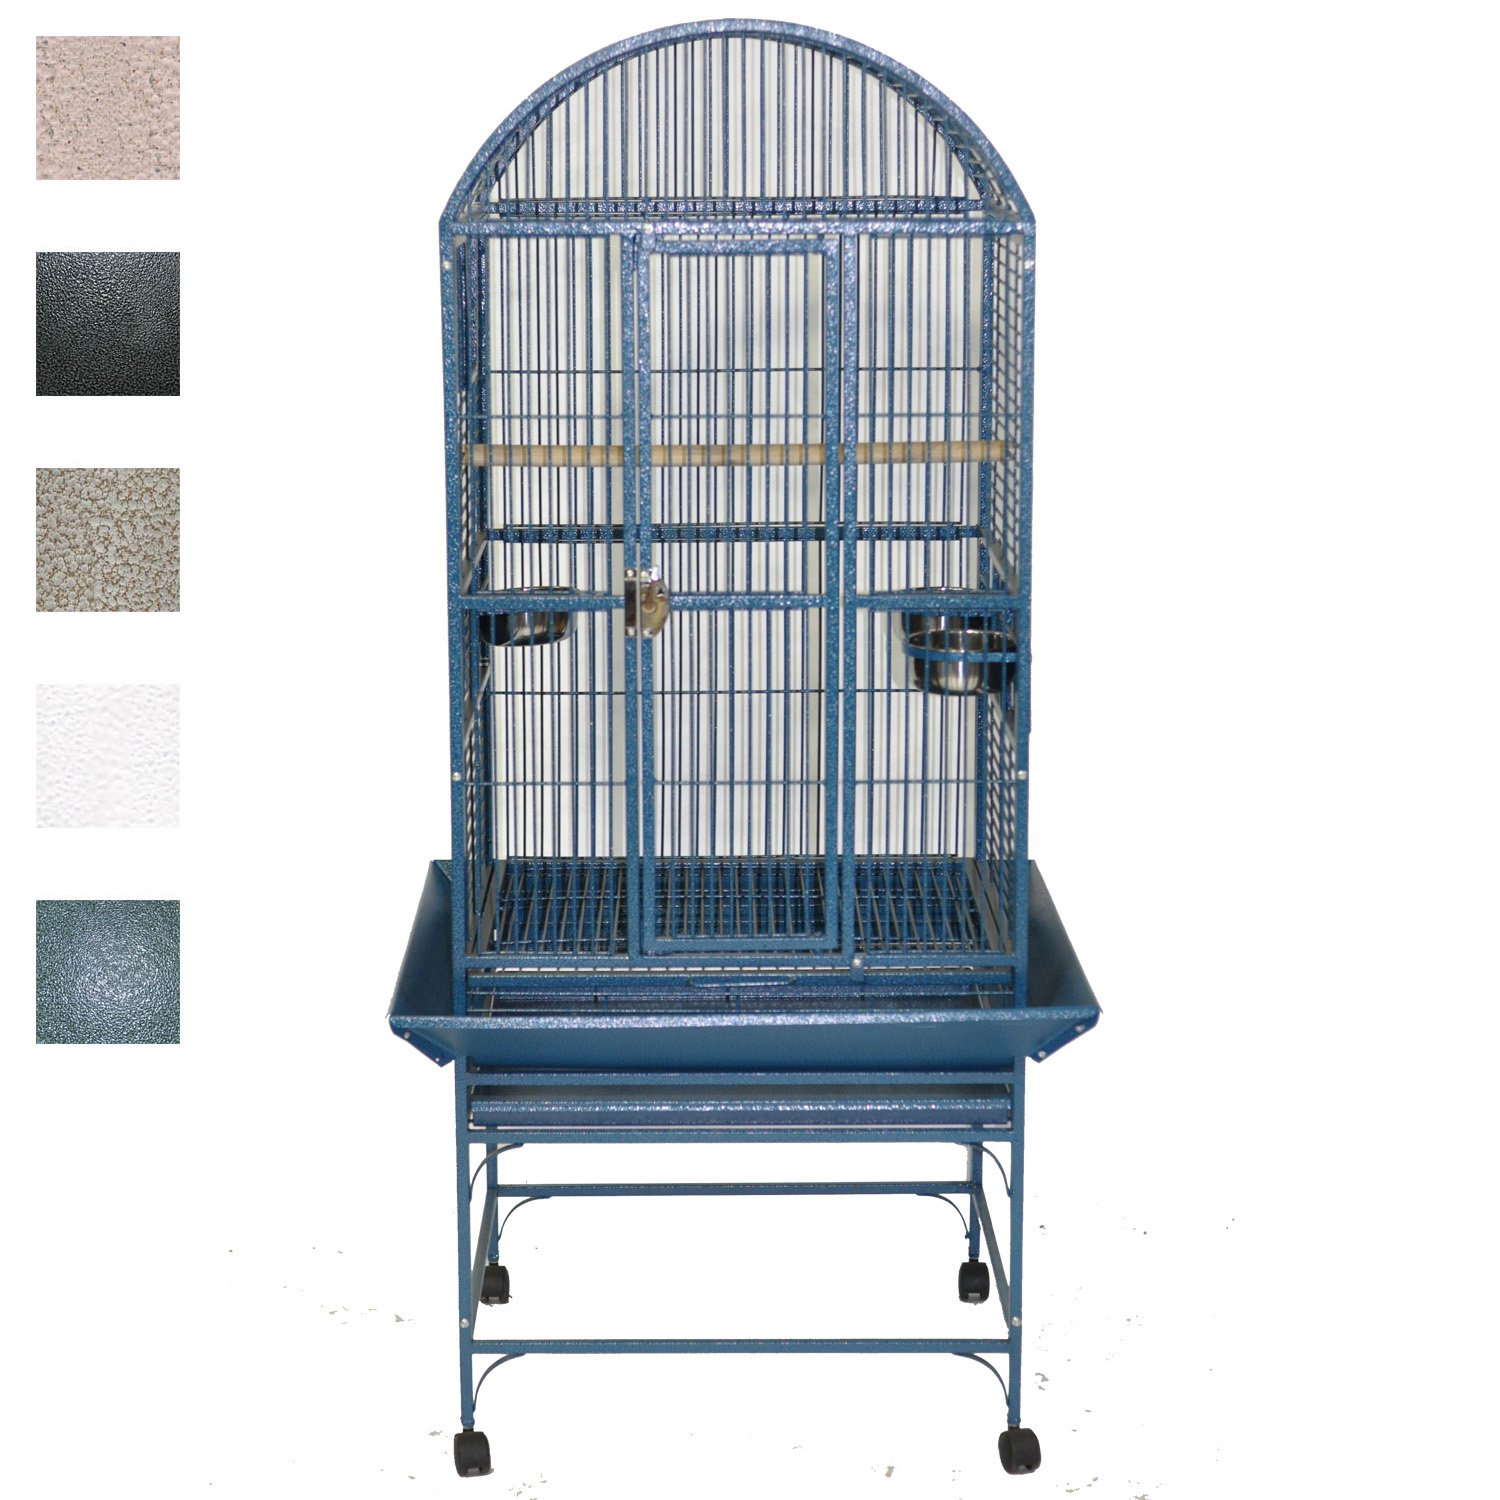 medium bird cage with stand